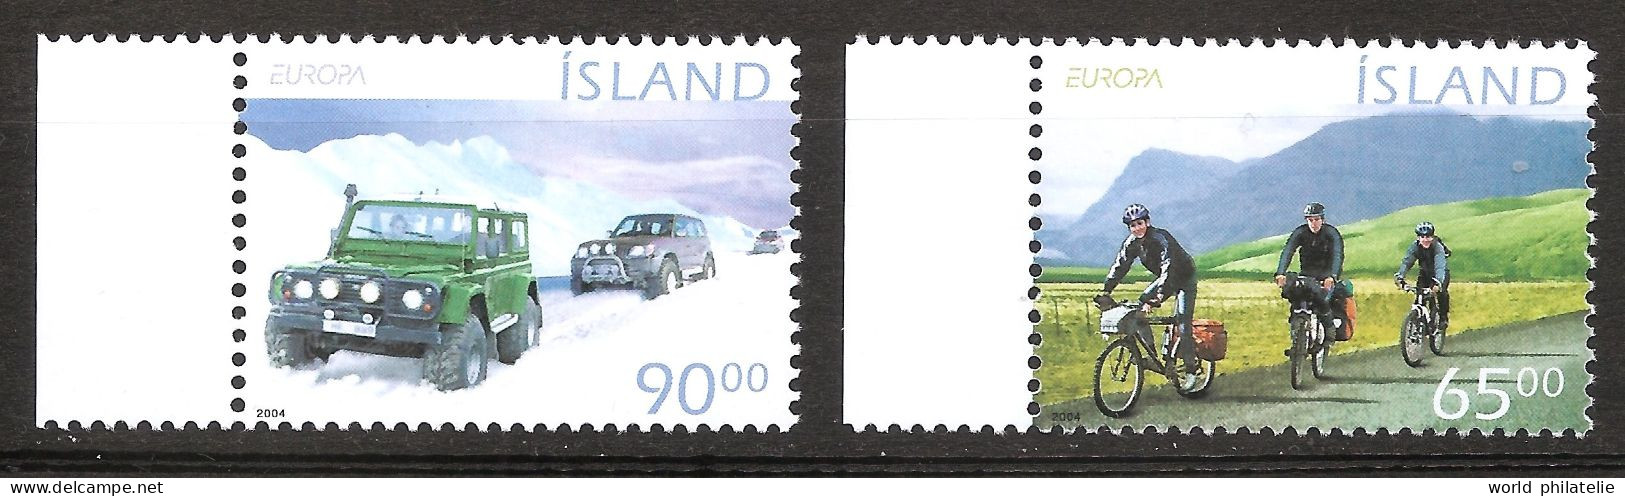 Islande Island 2004 N° 994 / 5 ** Europa, Vacances, Vélo, Jeep, Glaciers, Cyclisme, Route, Tourisme, 4x4, Neige Montagne - Neufs